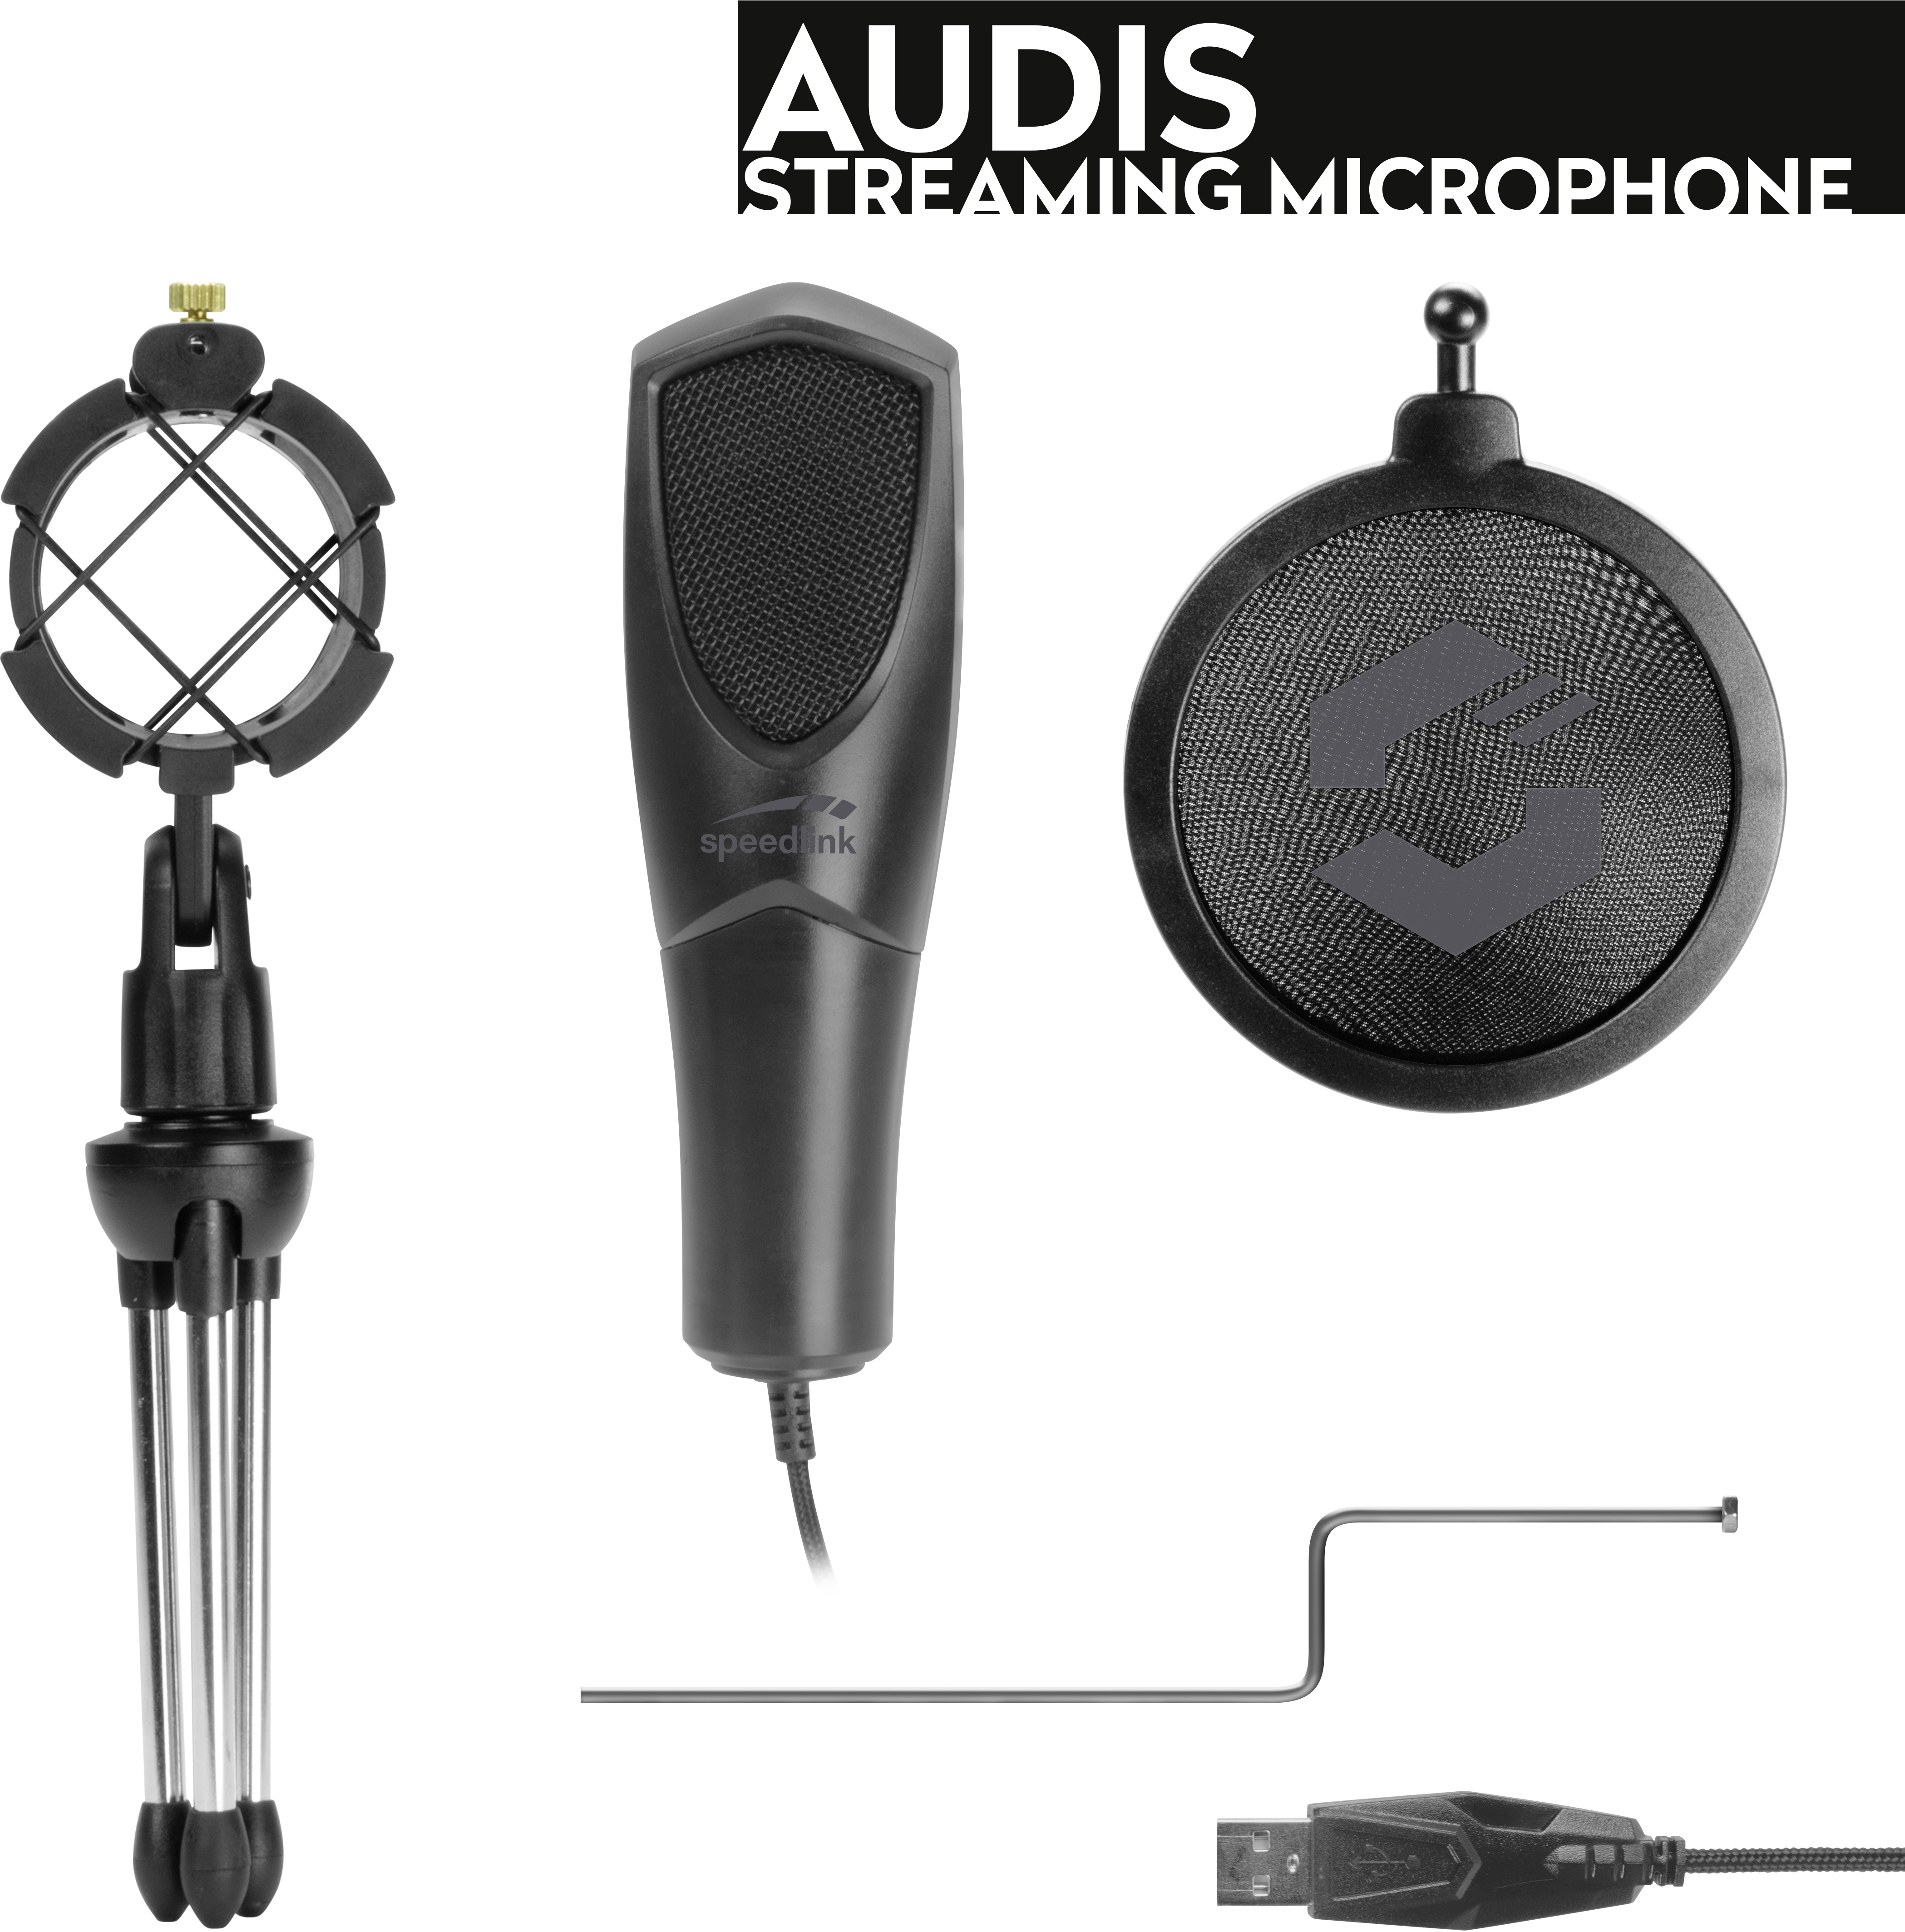 AUDIS Streaming Microphone, black